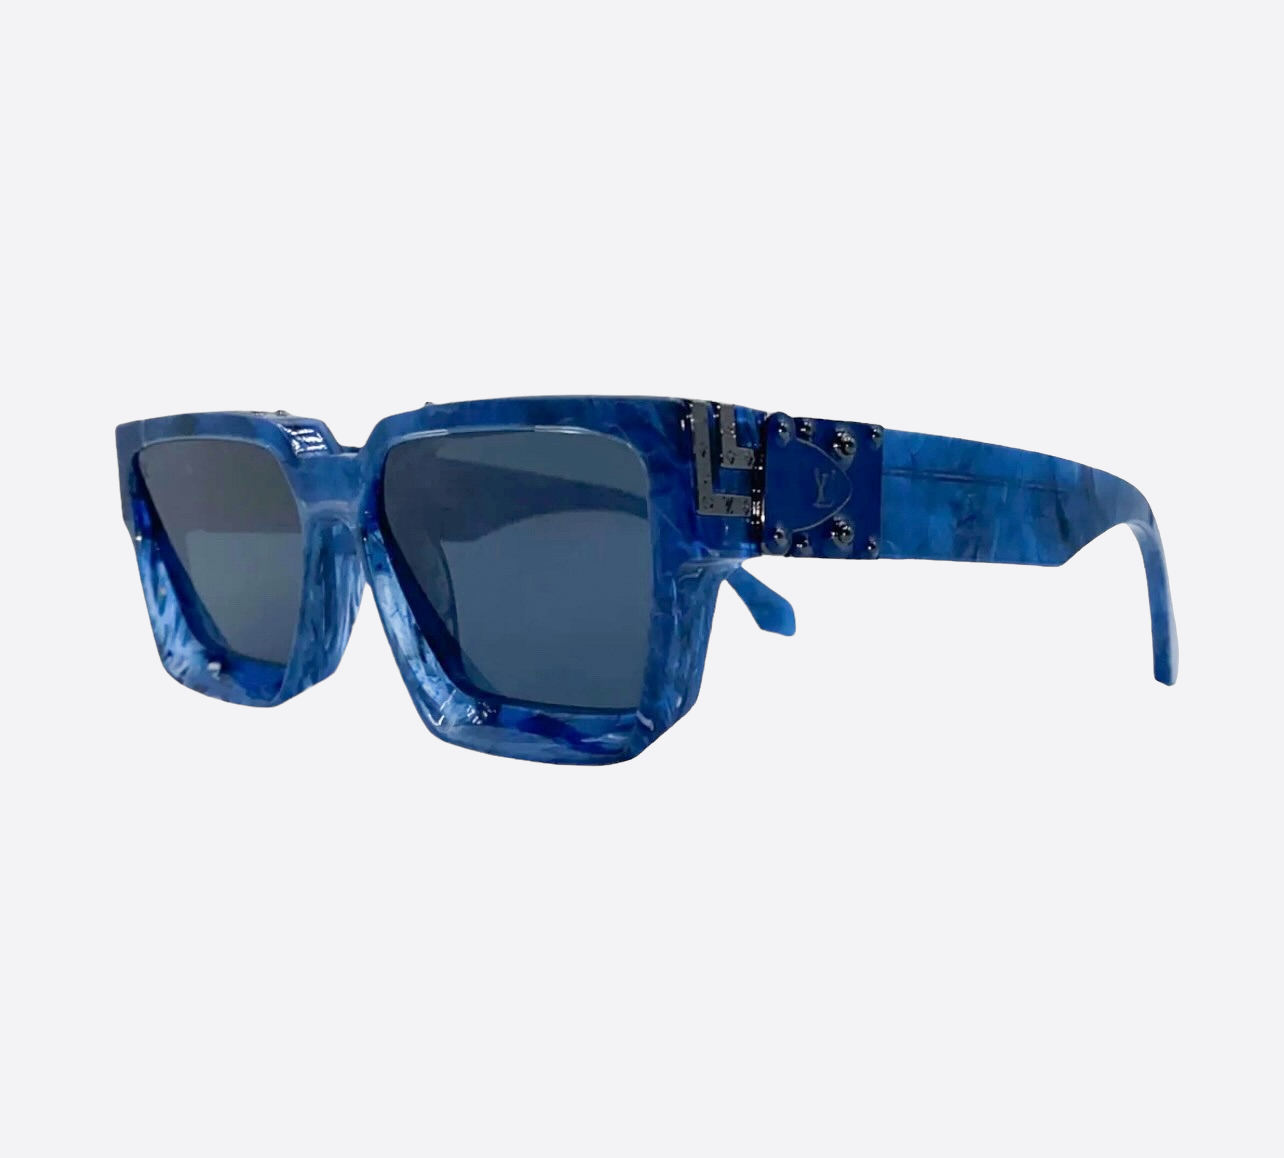 millionaire sunglasses louis vuitton price